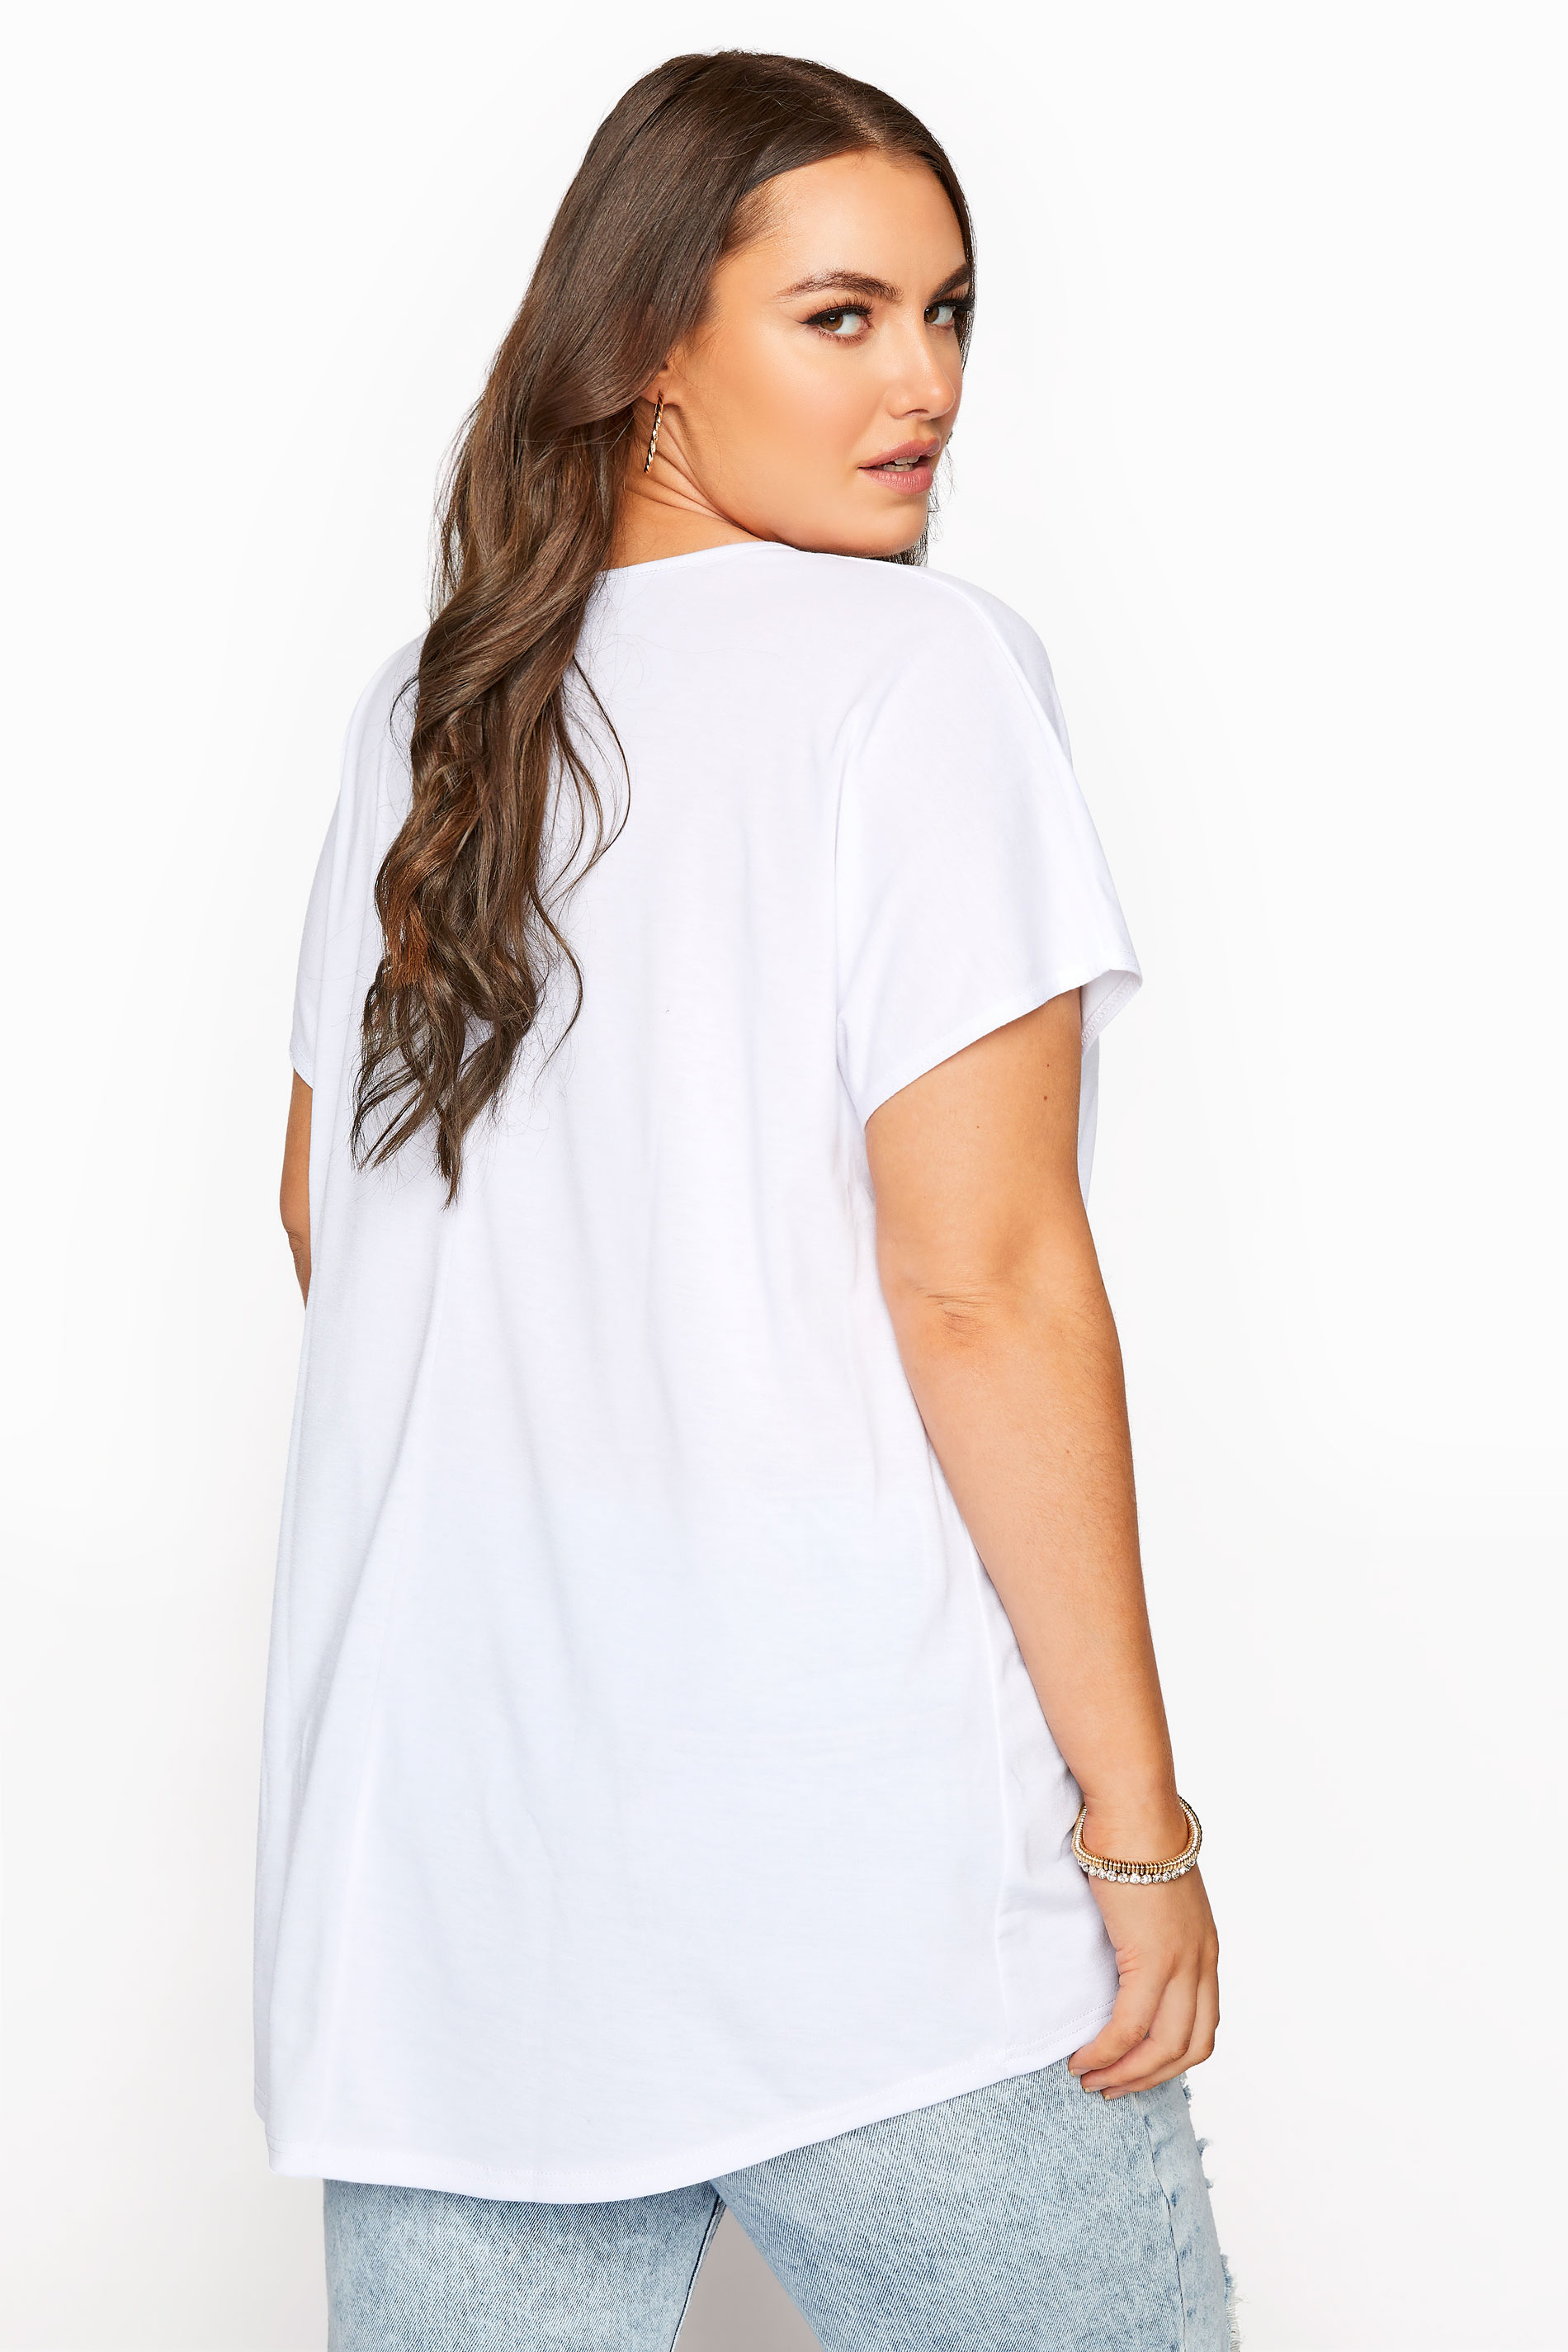 Grande taille  Tops Grande taille  Tops Casual | T-Shirt Blanc Imprimé Block Animal - FZ89164